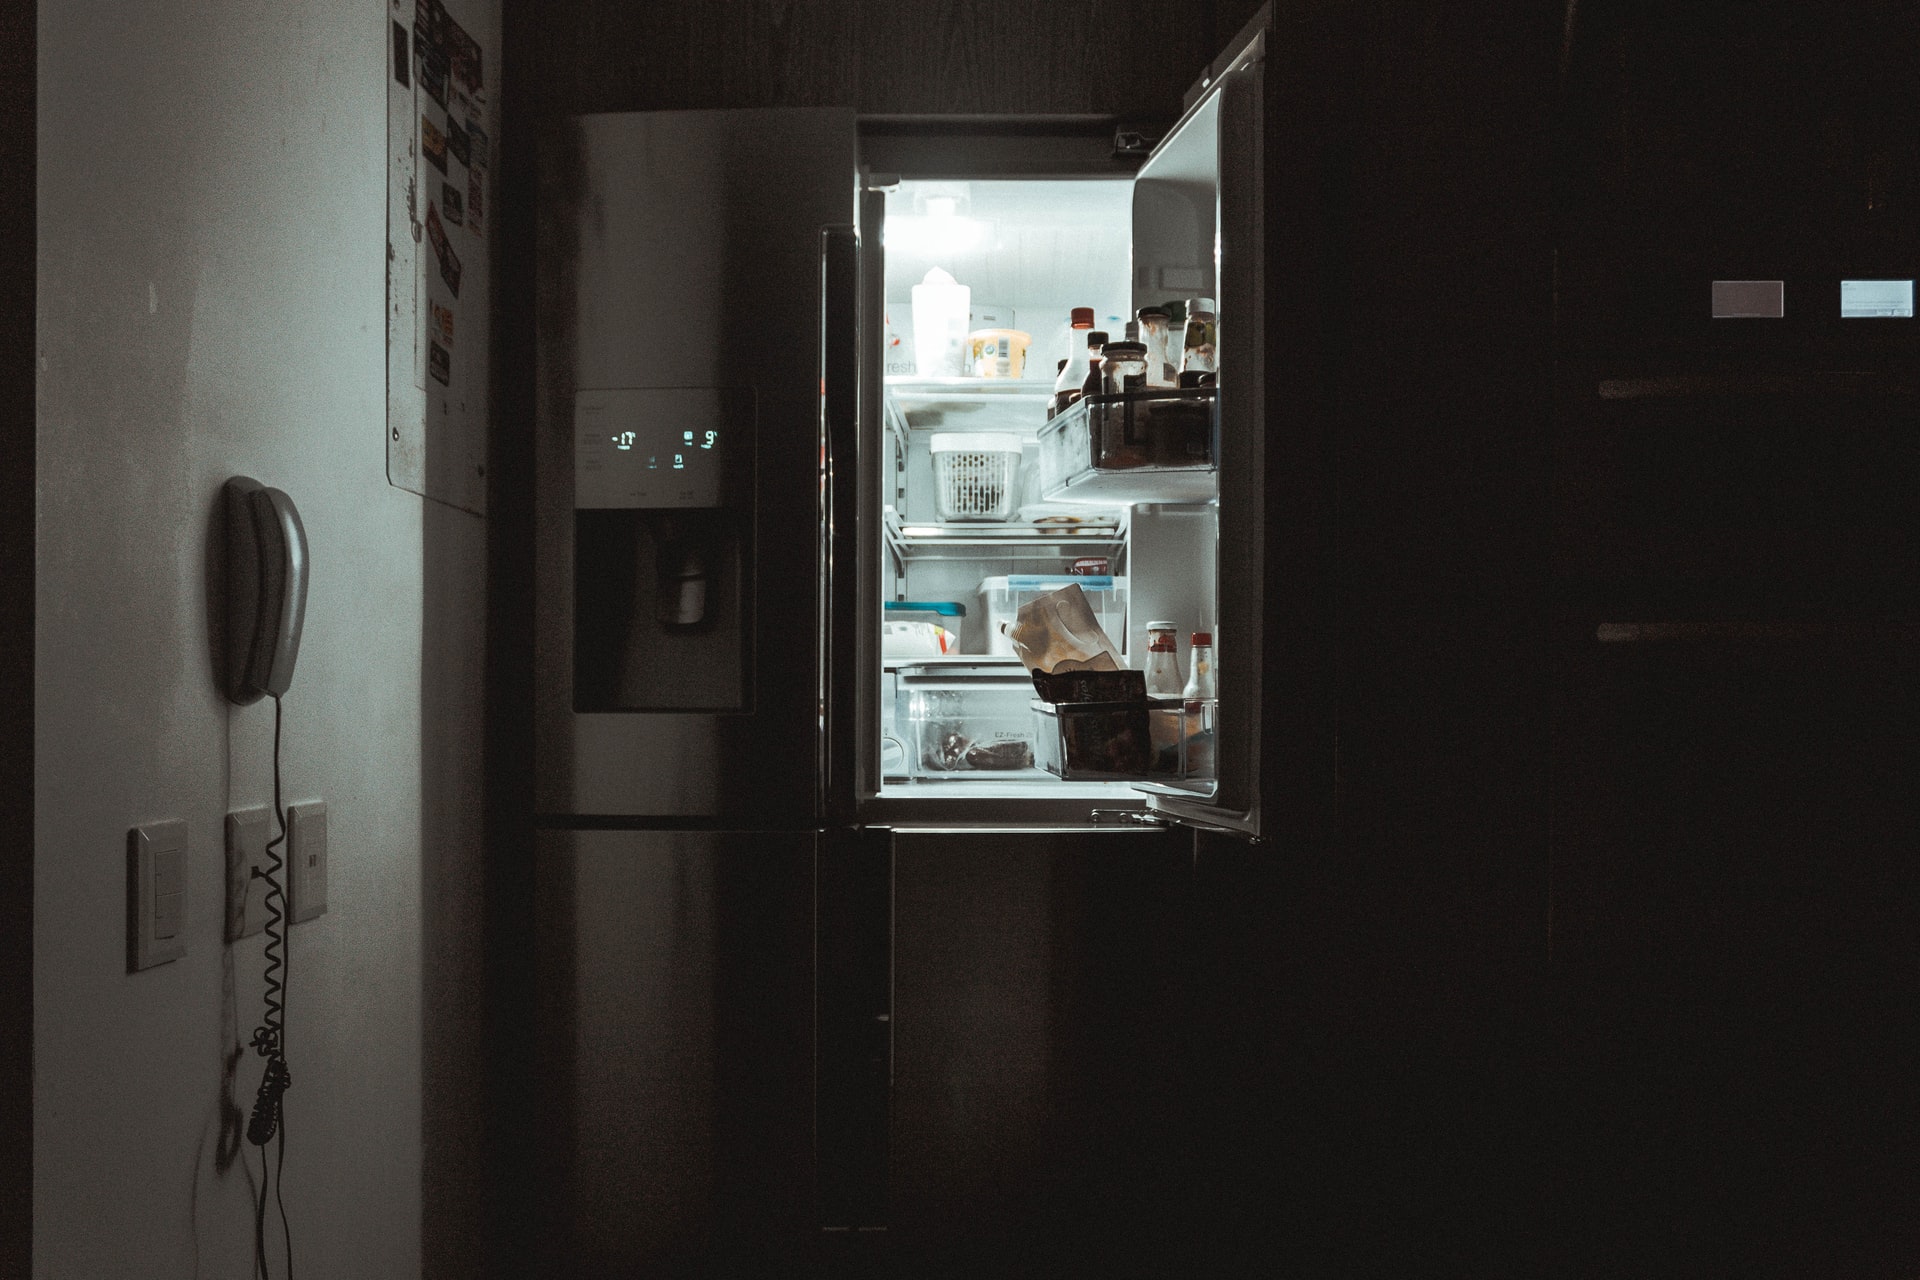 Как да изберем вграден хладилник